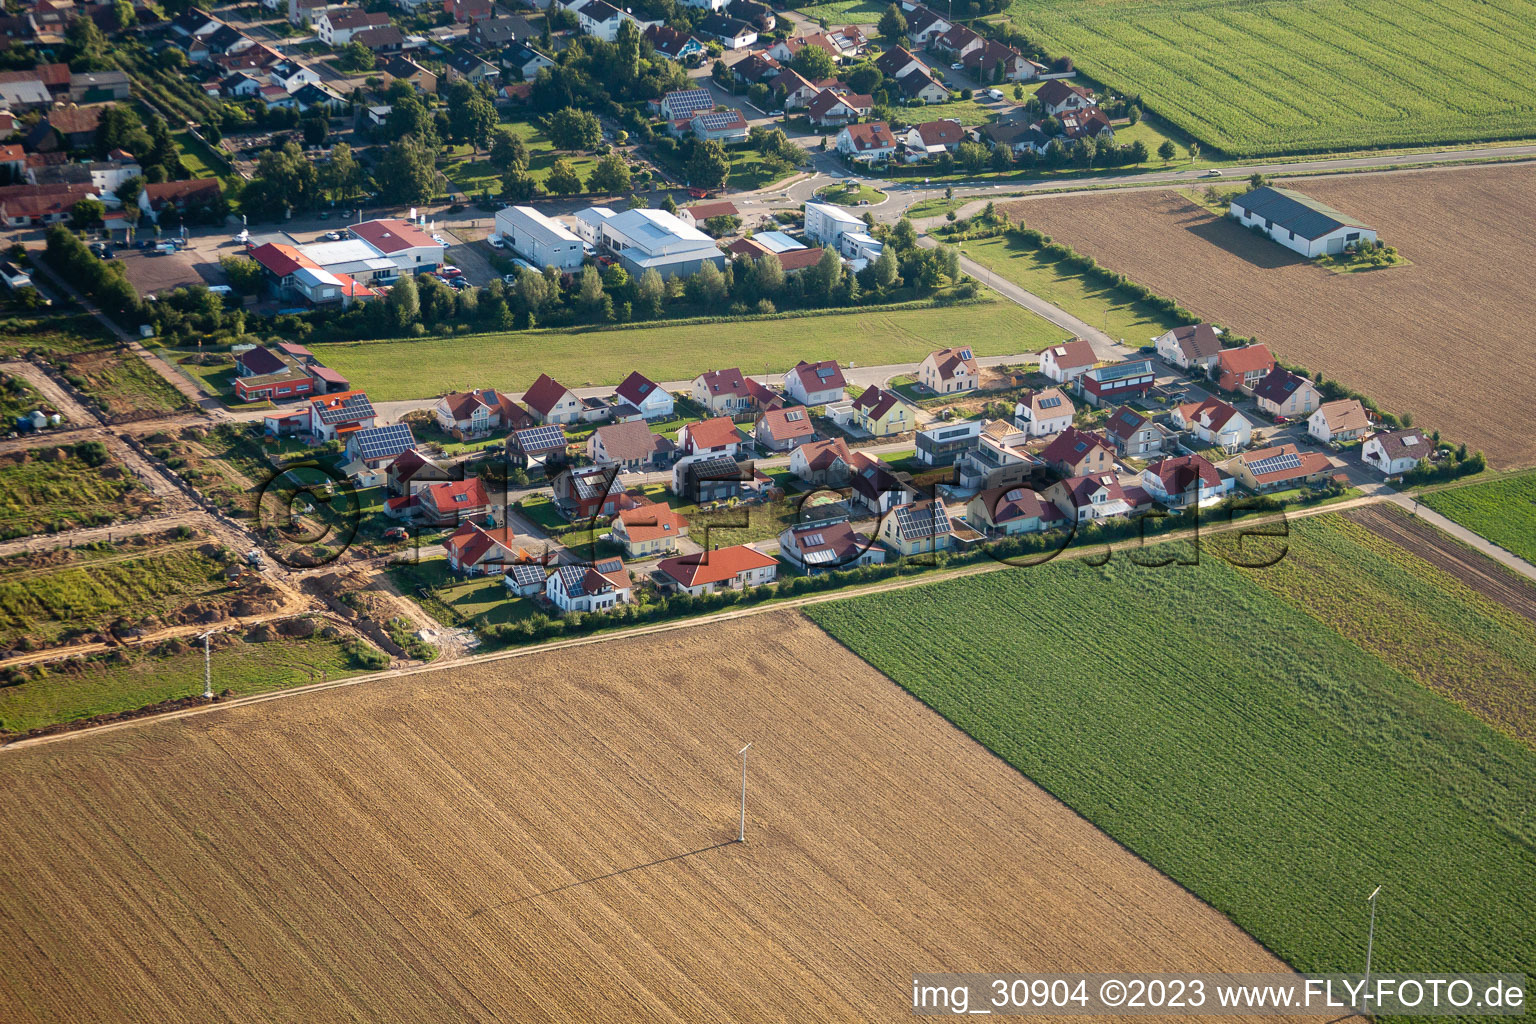 Bird's eye view of Brotäcker new development area in Steinweiler in the state Rhineland-Palatinate, Germany